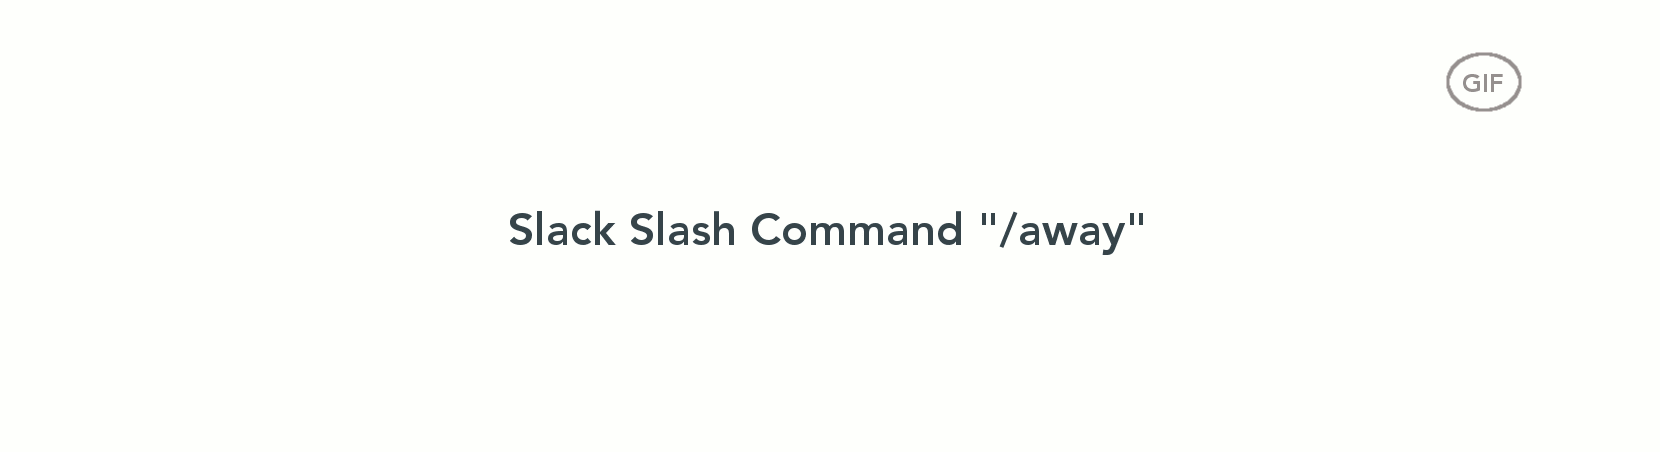 Slack command, away